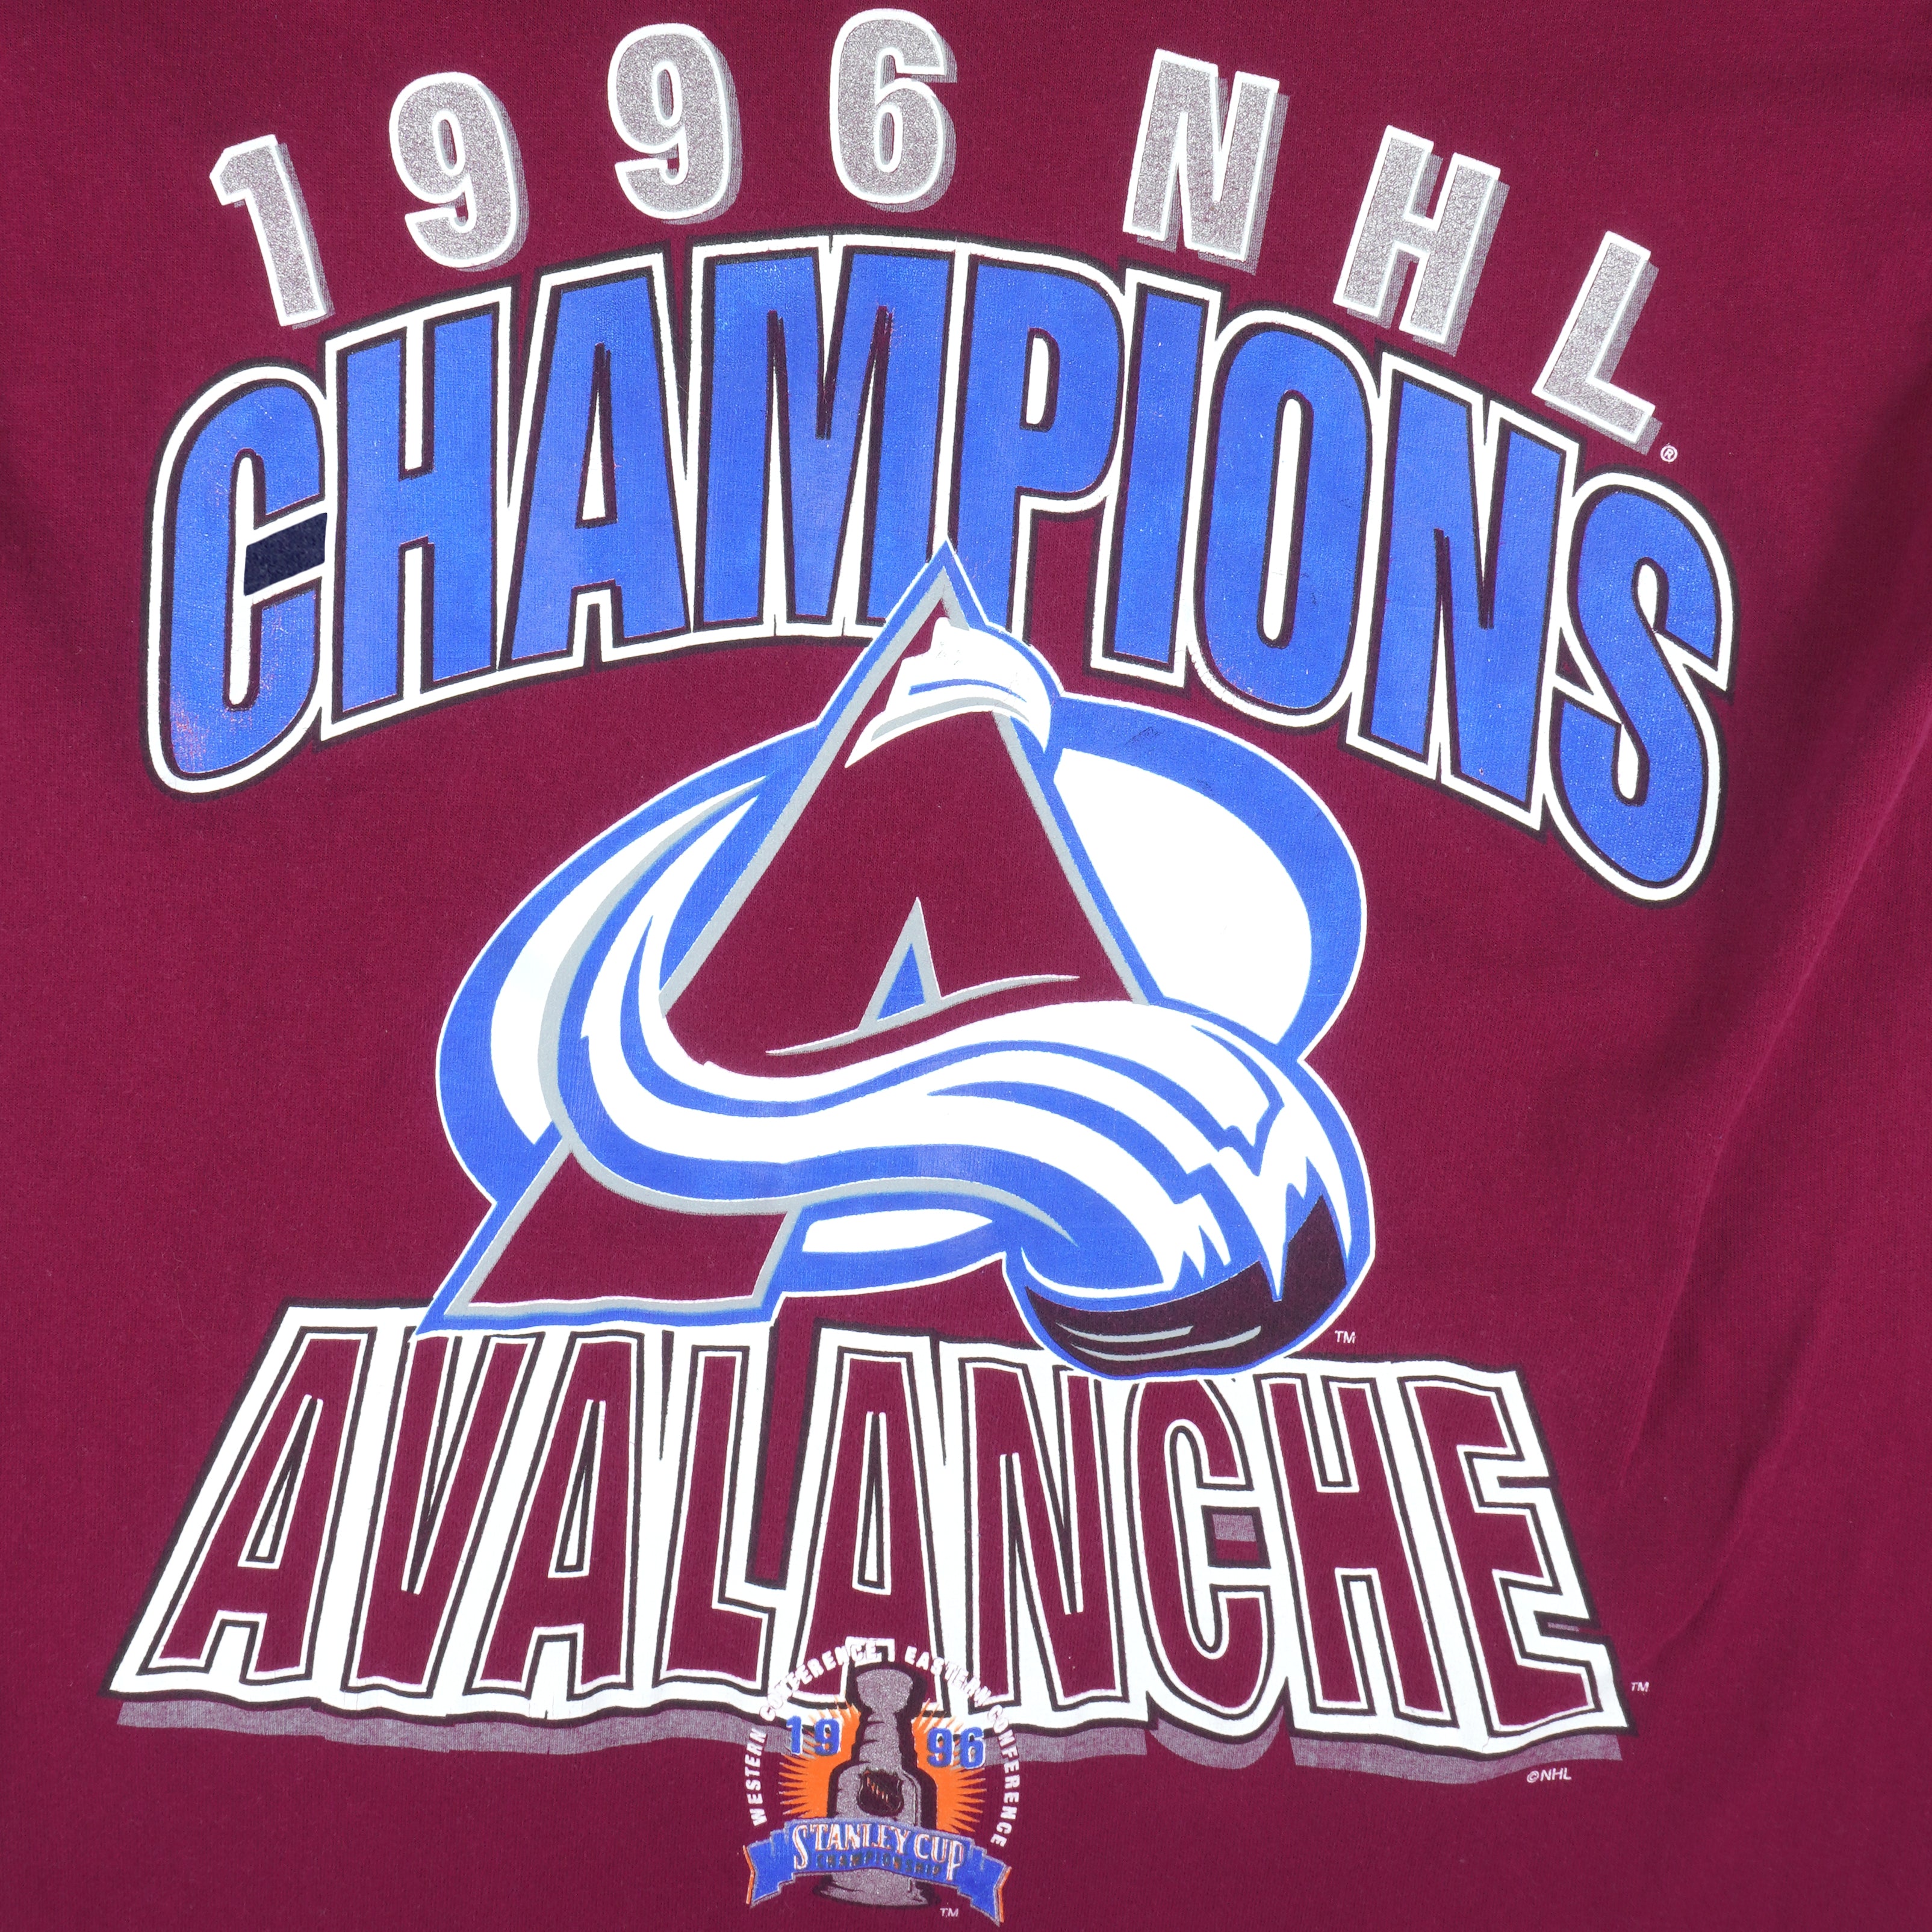 Vintage 00s Maroon Reebok NHL Colorado Avalanche T-Shirt - XX